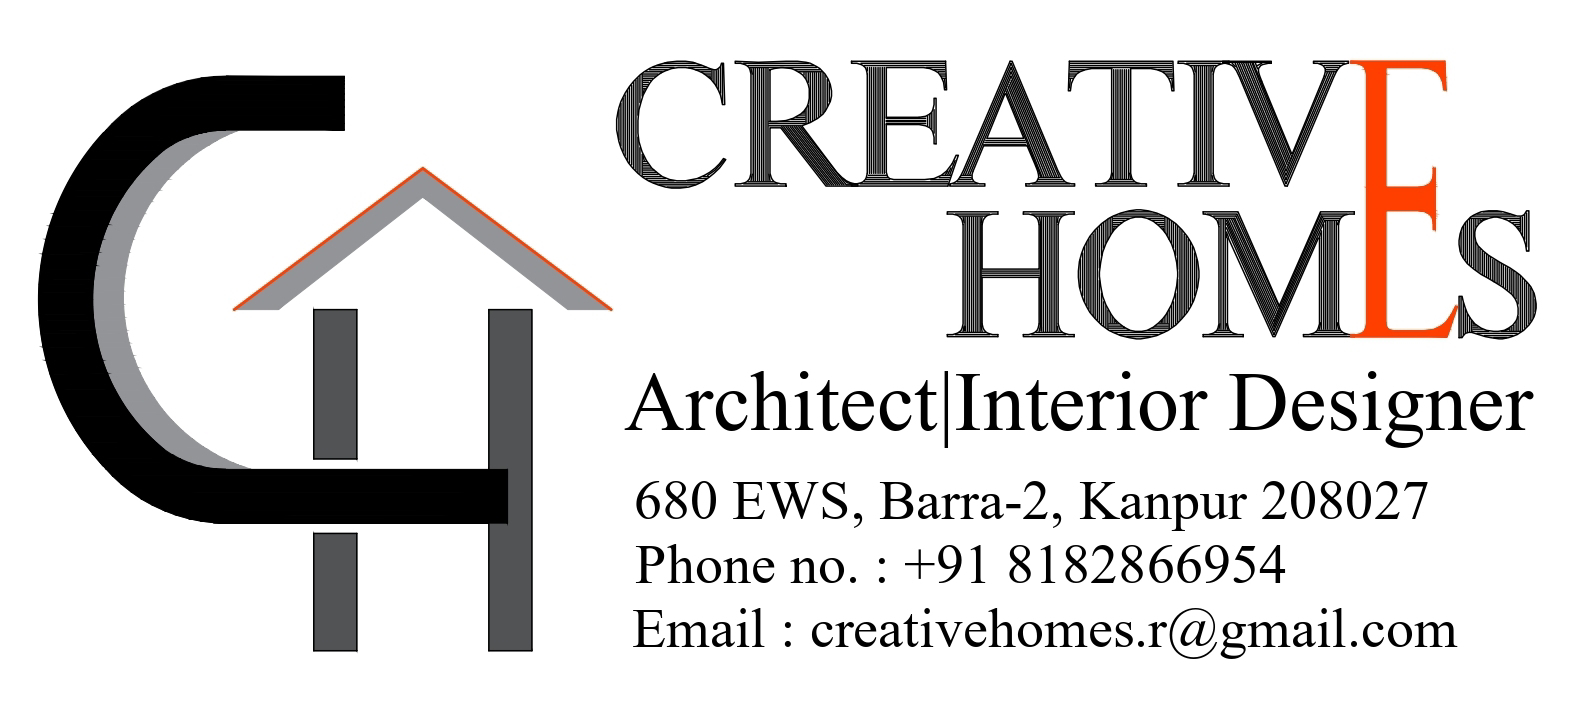 Creative Homes - Architect | Interior Designer|Architect|Professional Services